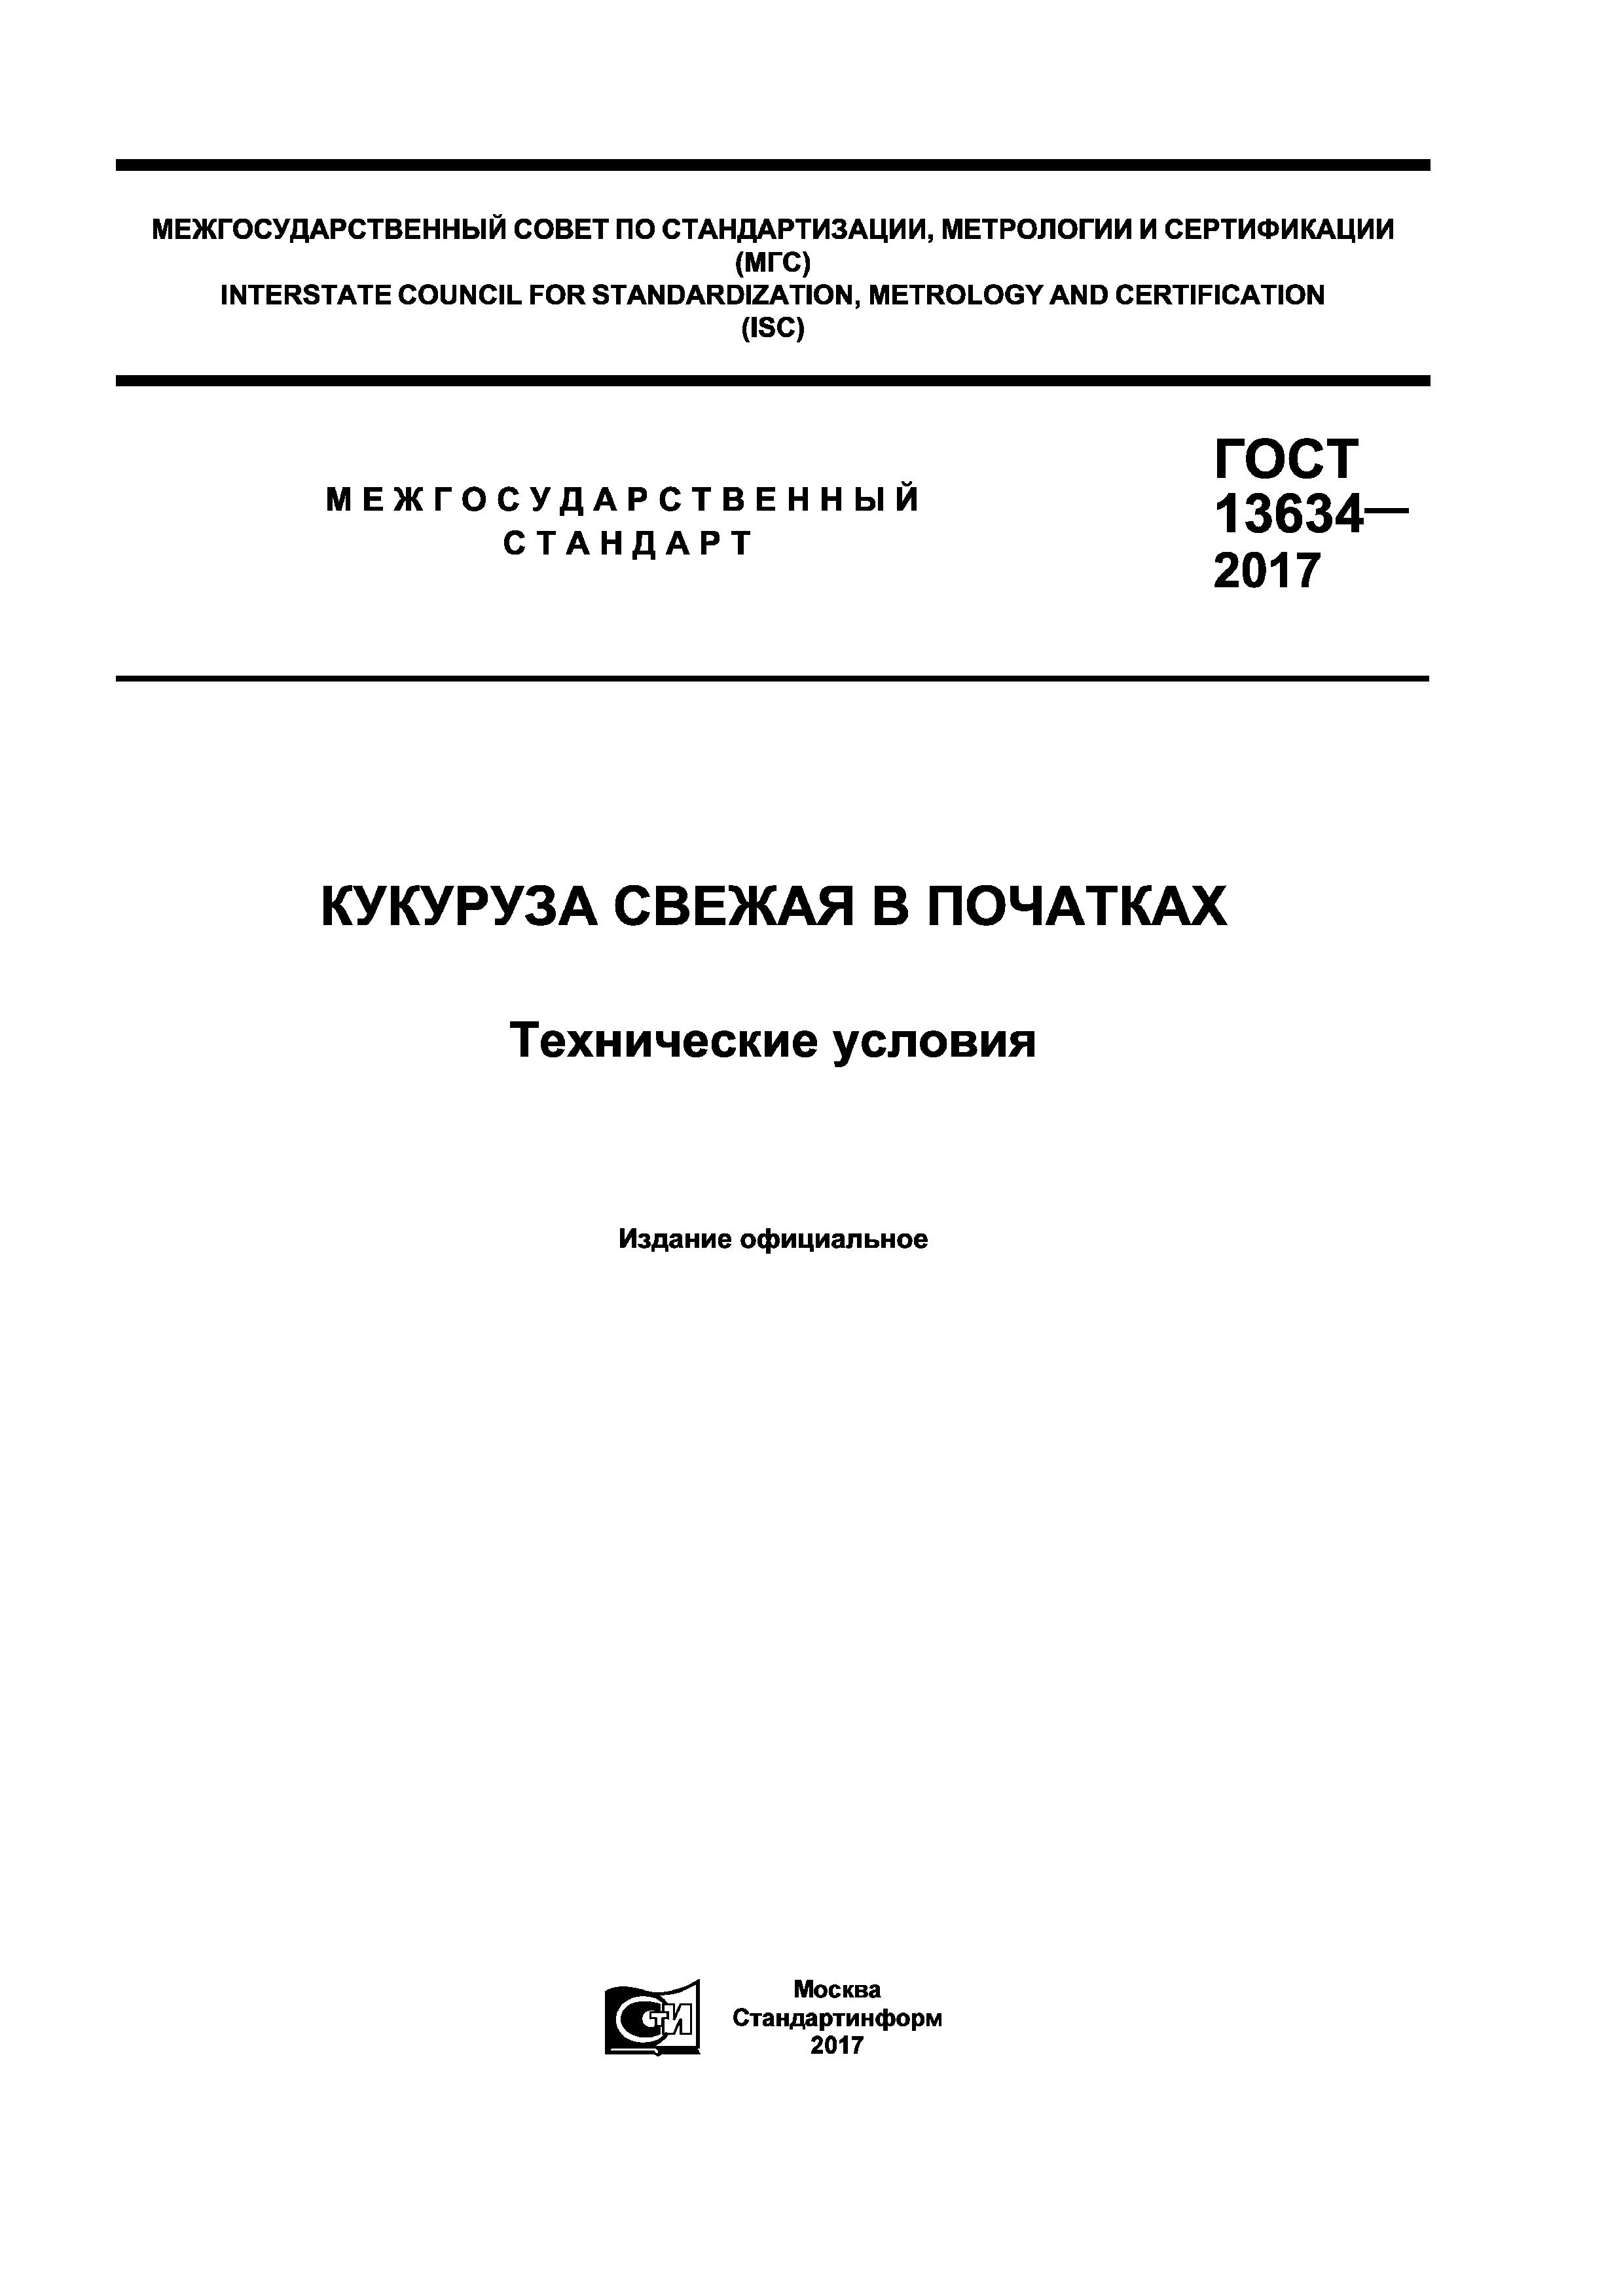 ГОСТ 13634-2017